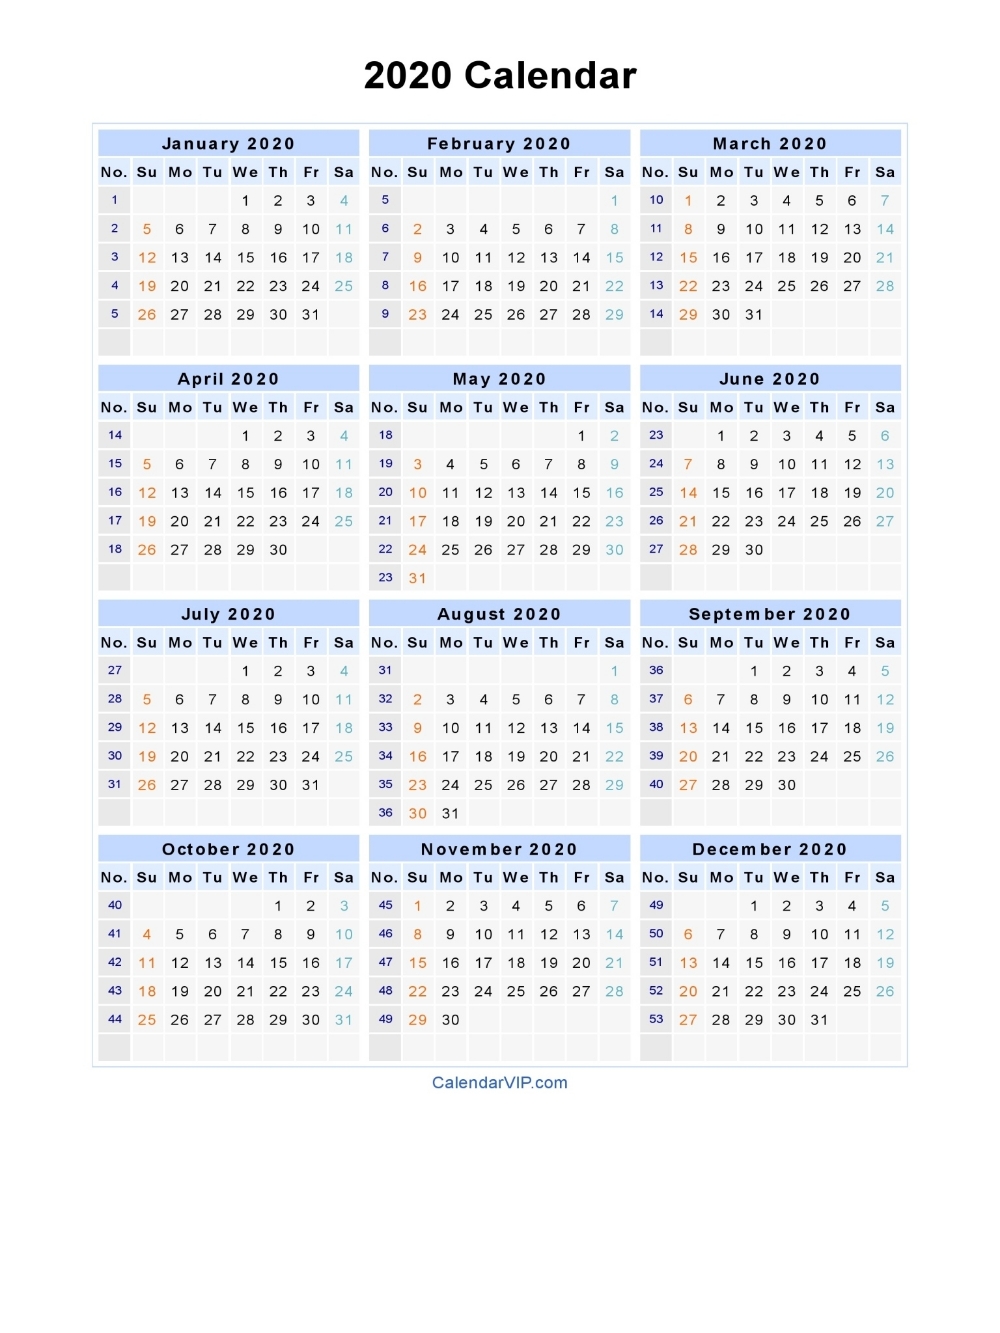 2020 Calendar - Blank Printable Calendar Template In Pdf Impressive 2020 Calendar By Week